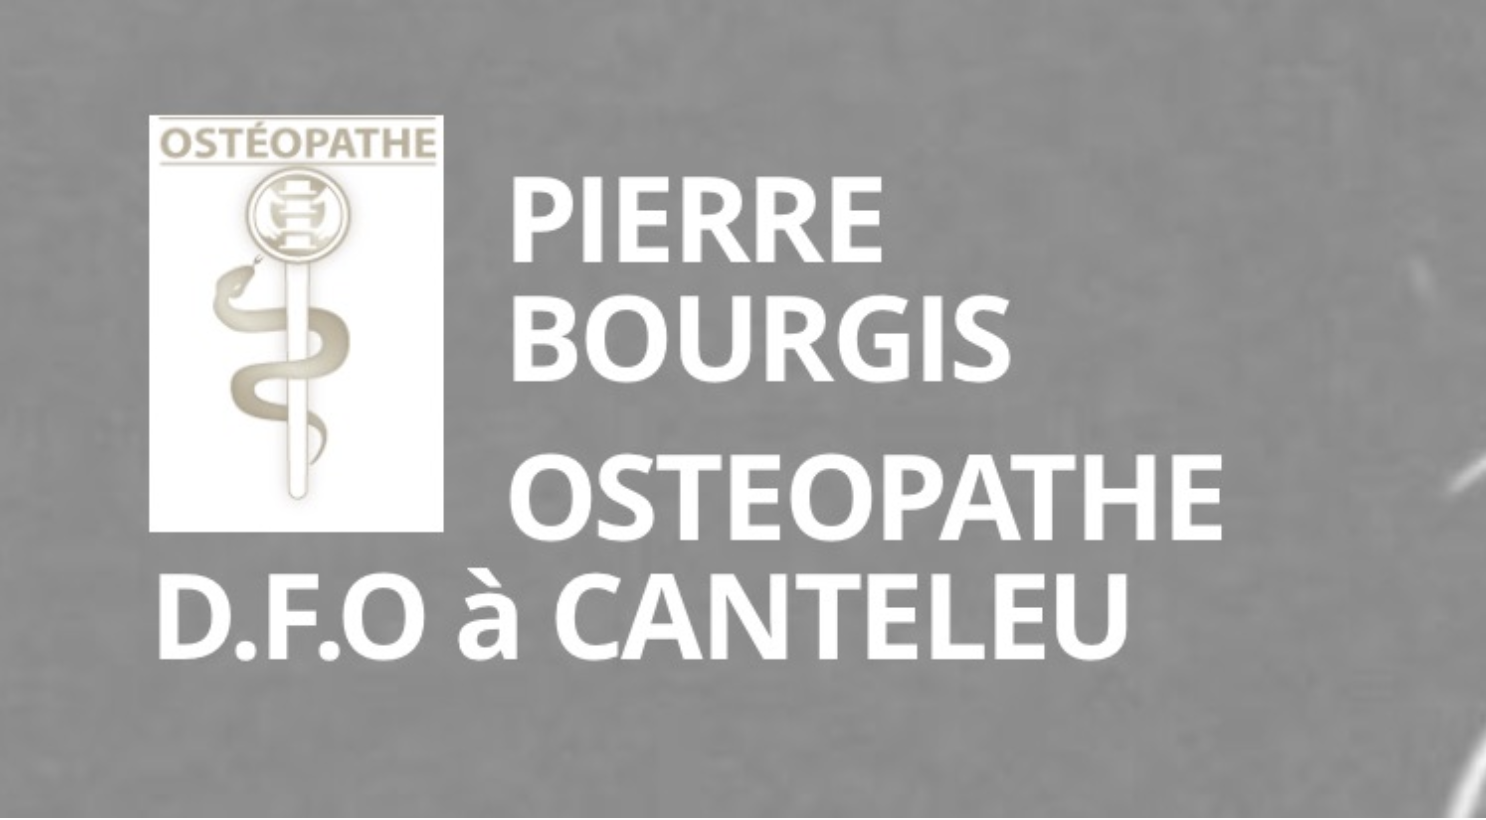 PIERRE BOURGIS OSTEOPATHE D.F.O CANTELEU